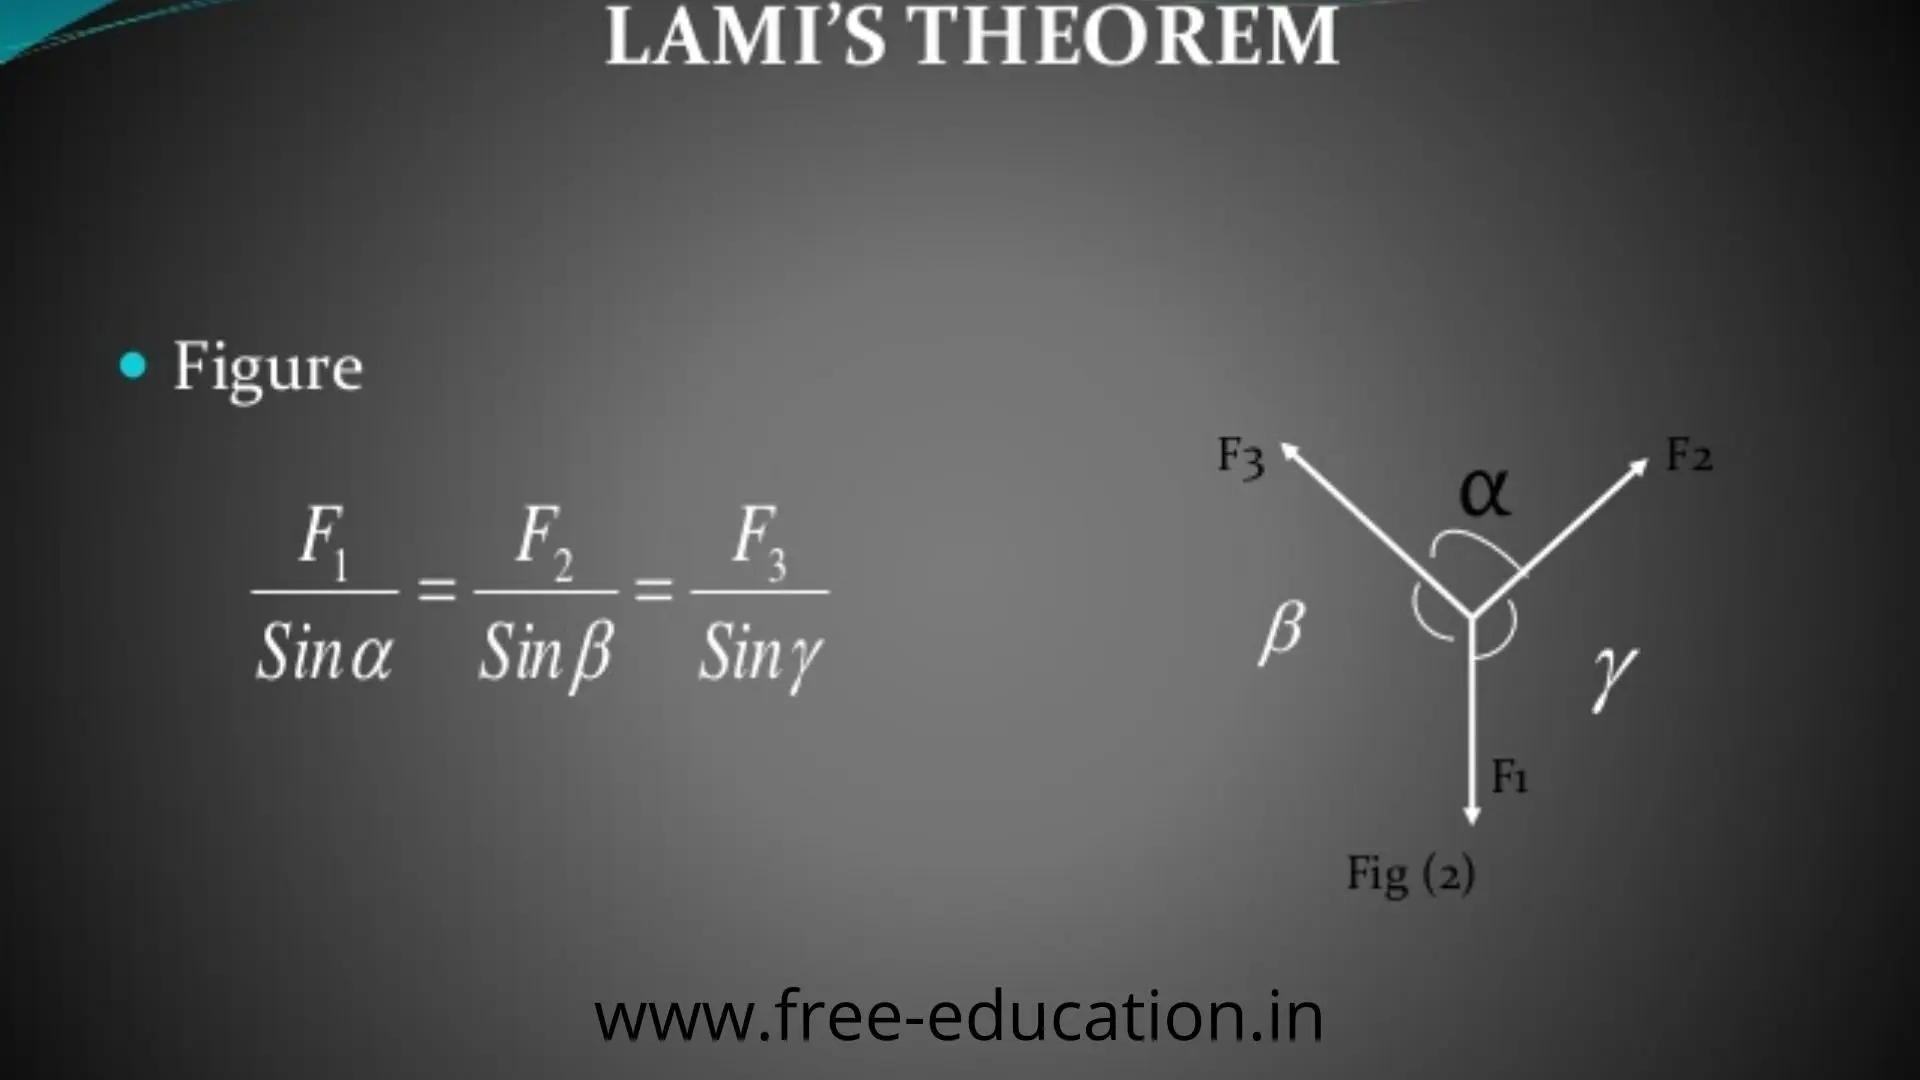 Lami's Theorem